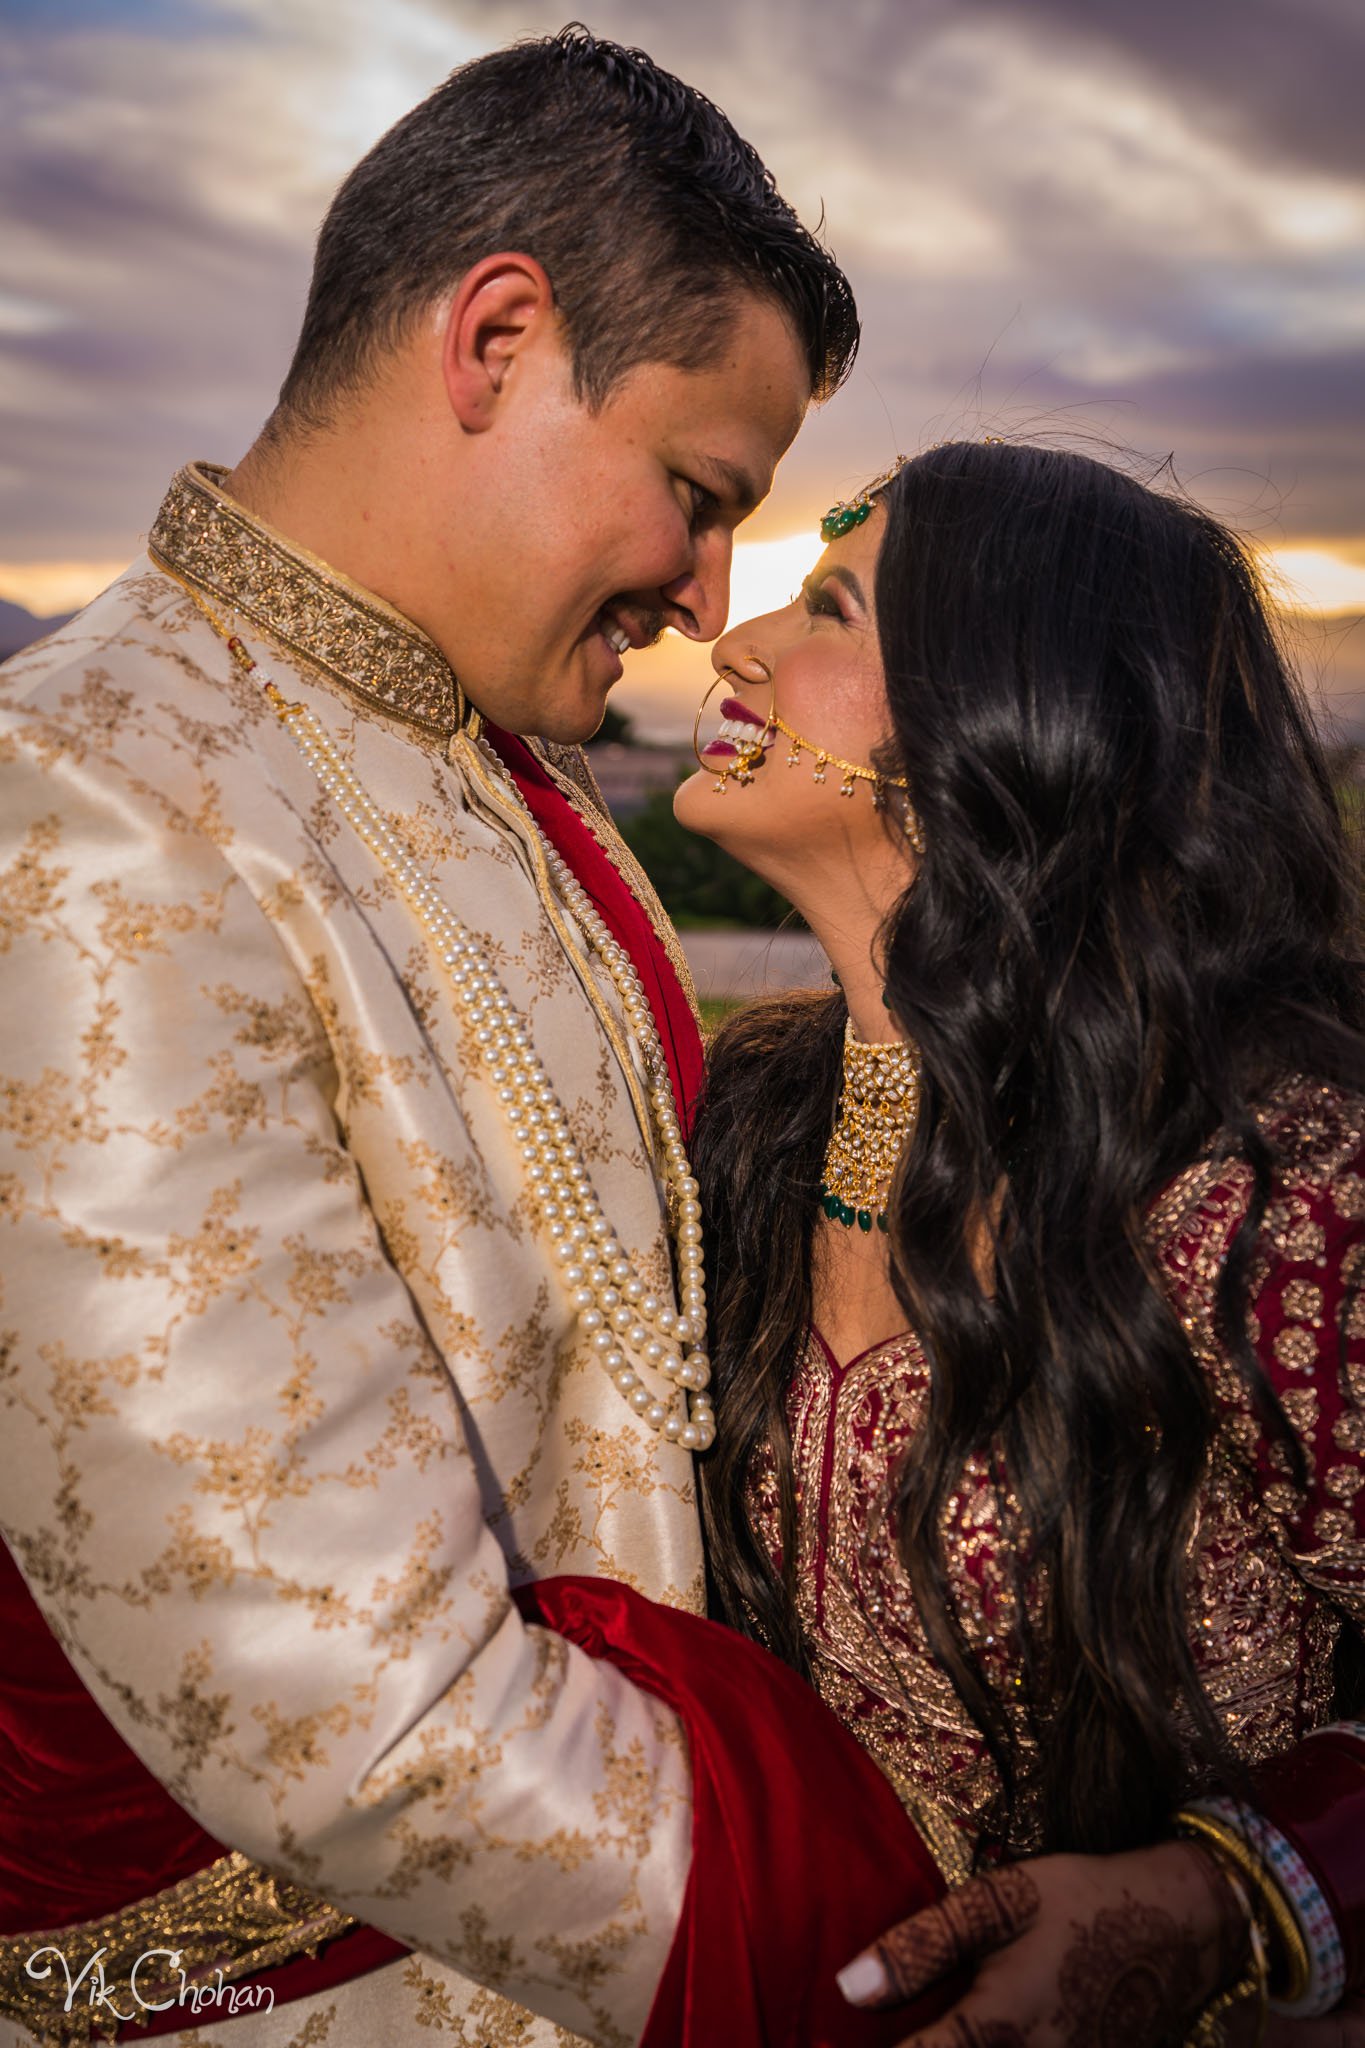 2022-06-09-Annie-&-Steven-Las-Vegas-Indian-Wedding-Ceremony-Photography-Vik-Chohan-Photography-Photo-Booth-Social-Media-VCP-269.jpg